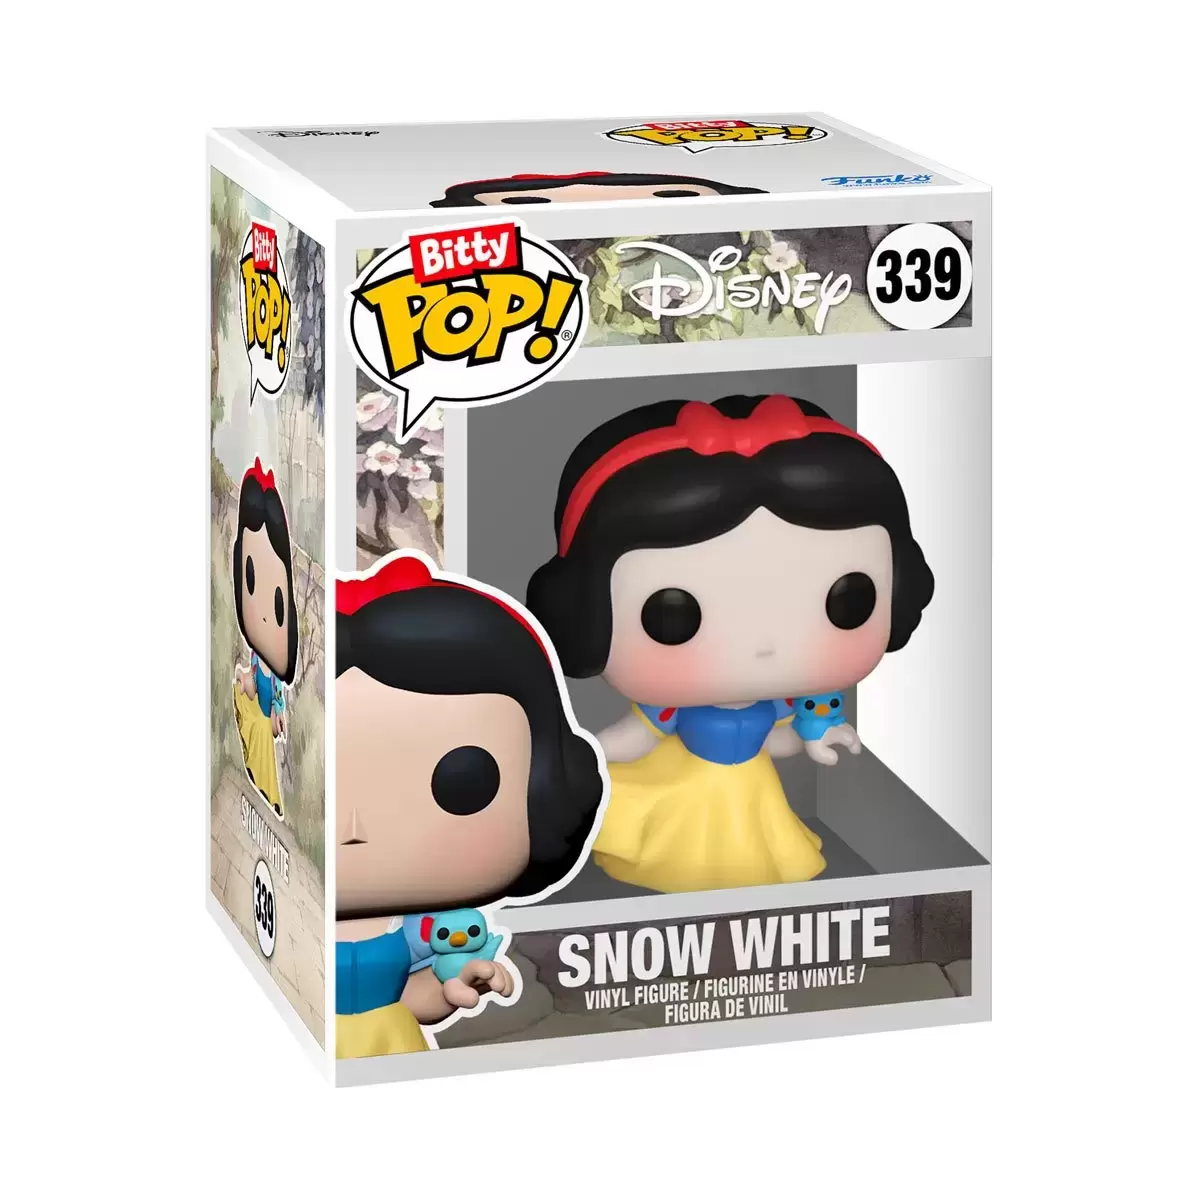 Bitty POP! - Disney Princess - Snow White